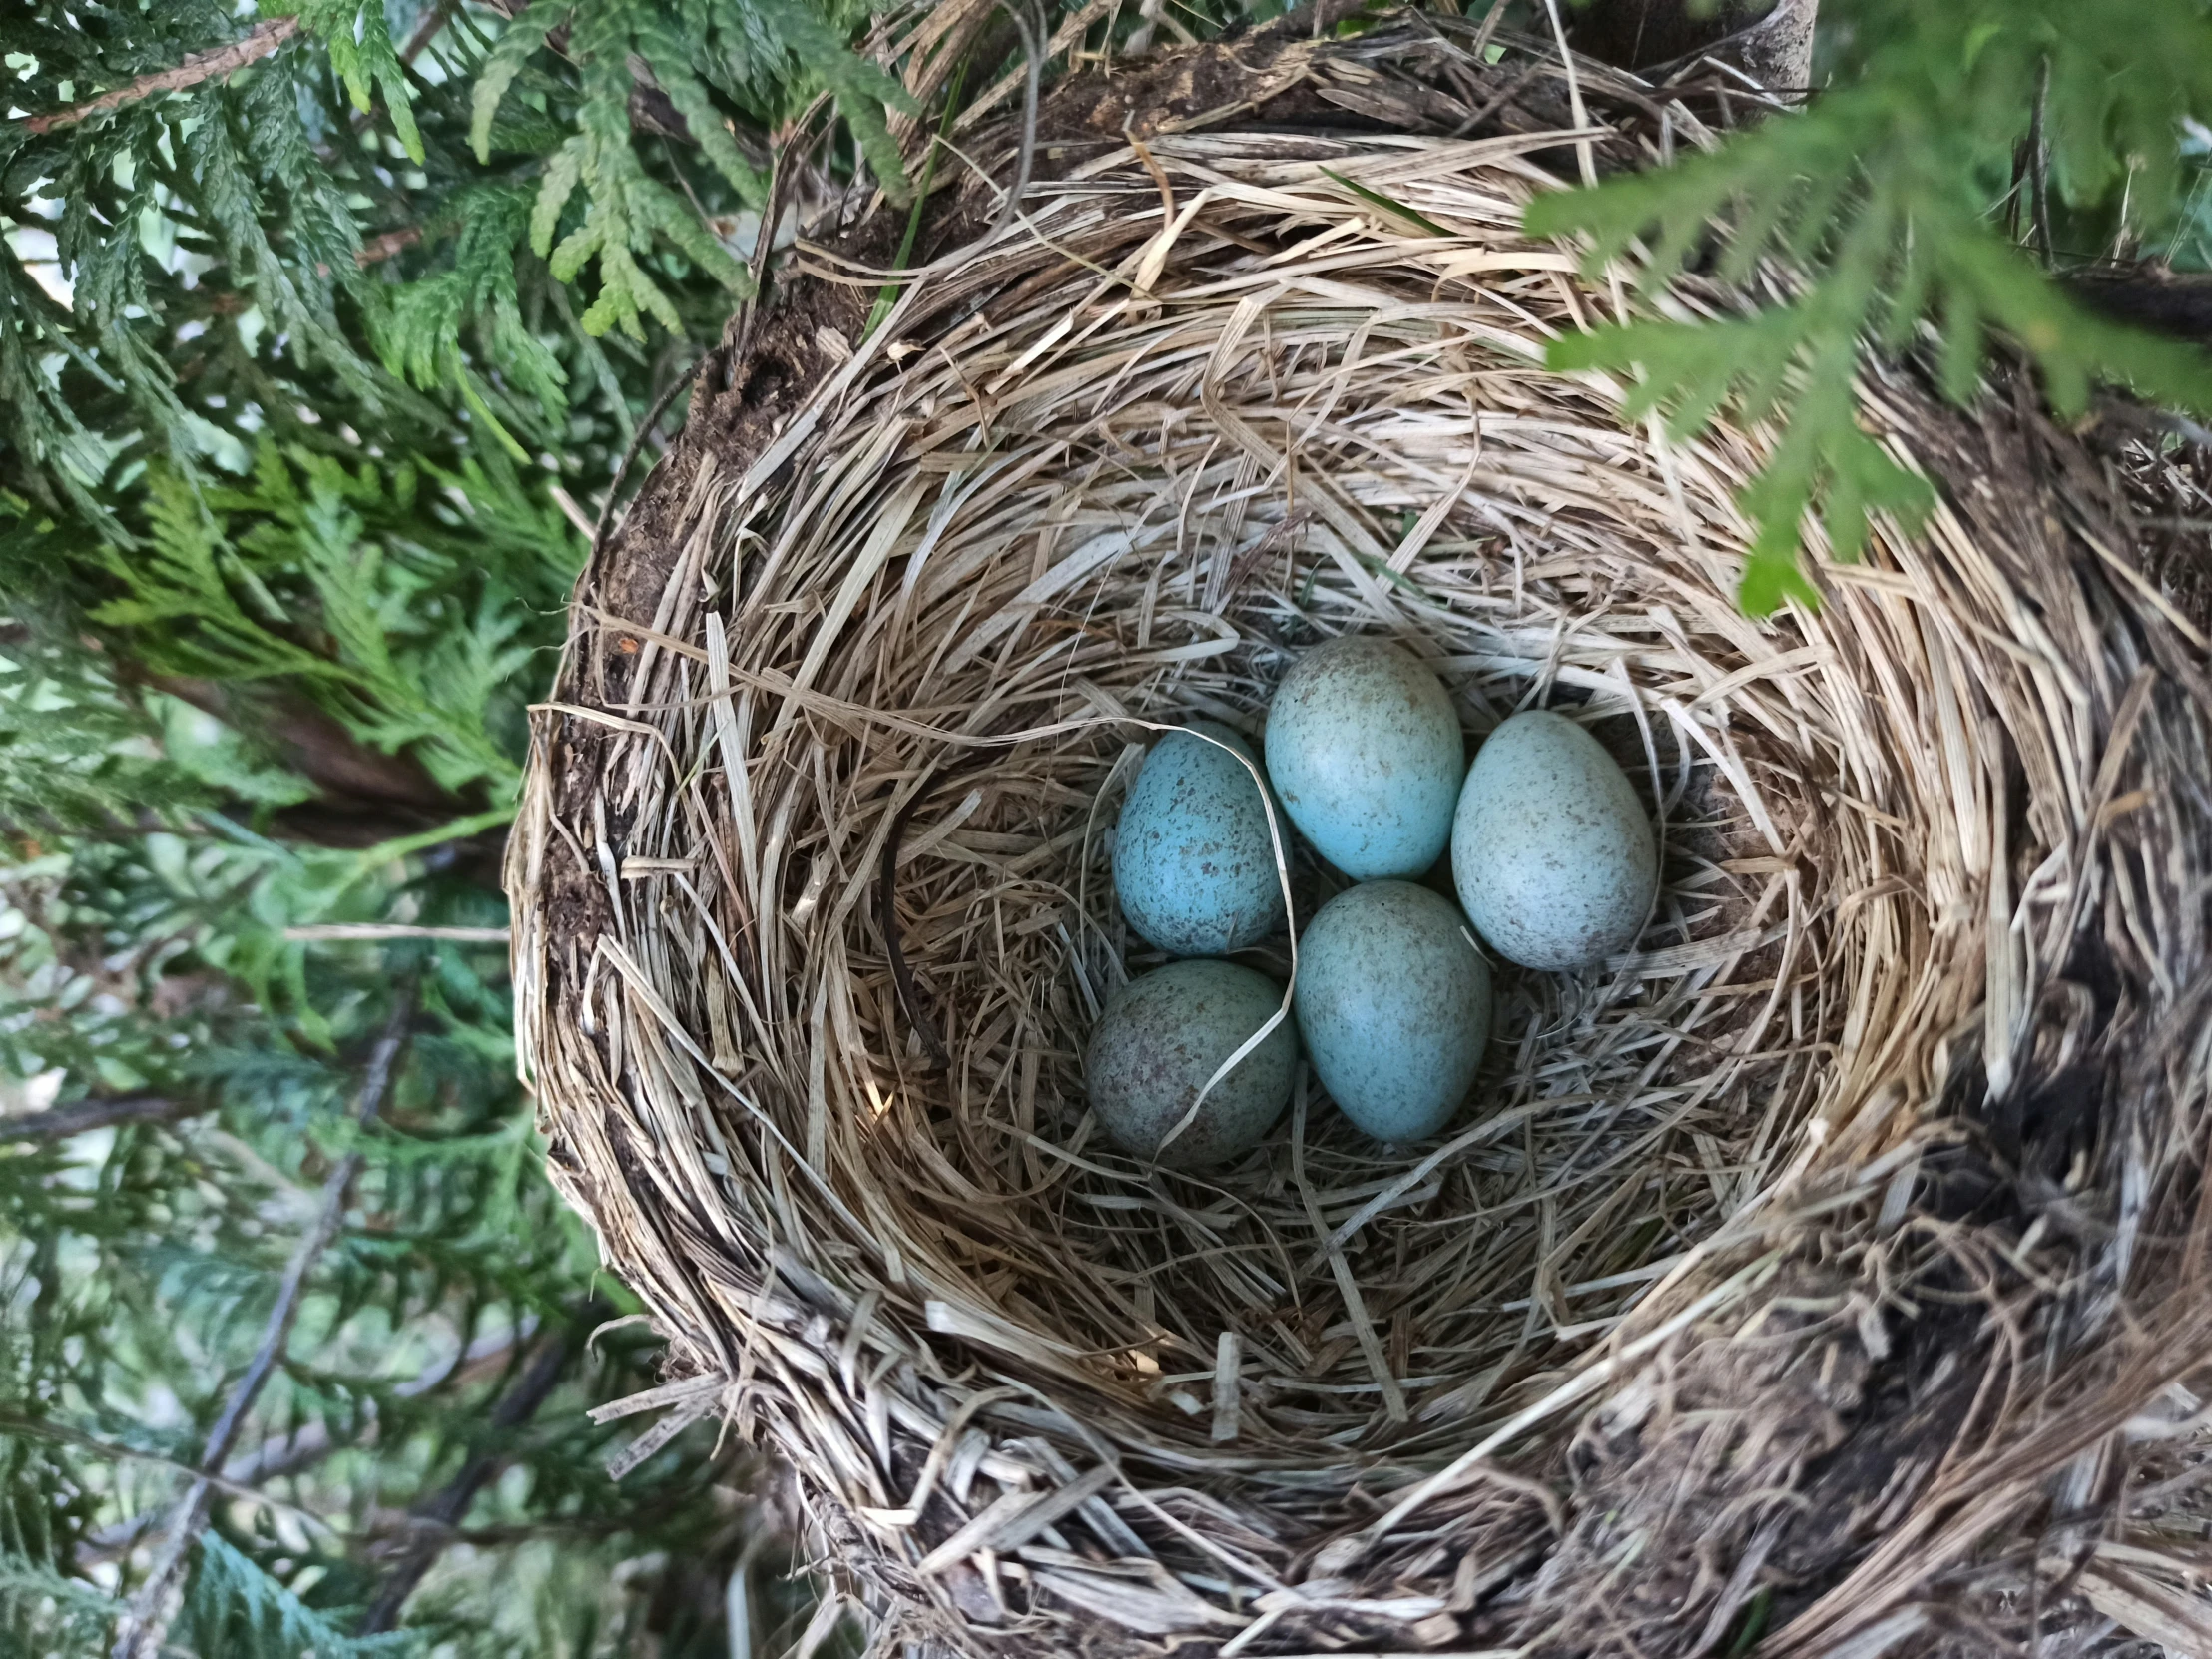 a bird's nest has four eggs in it